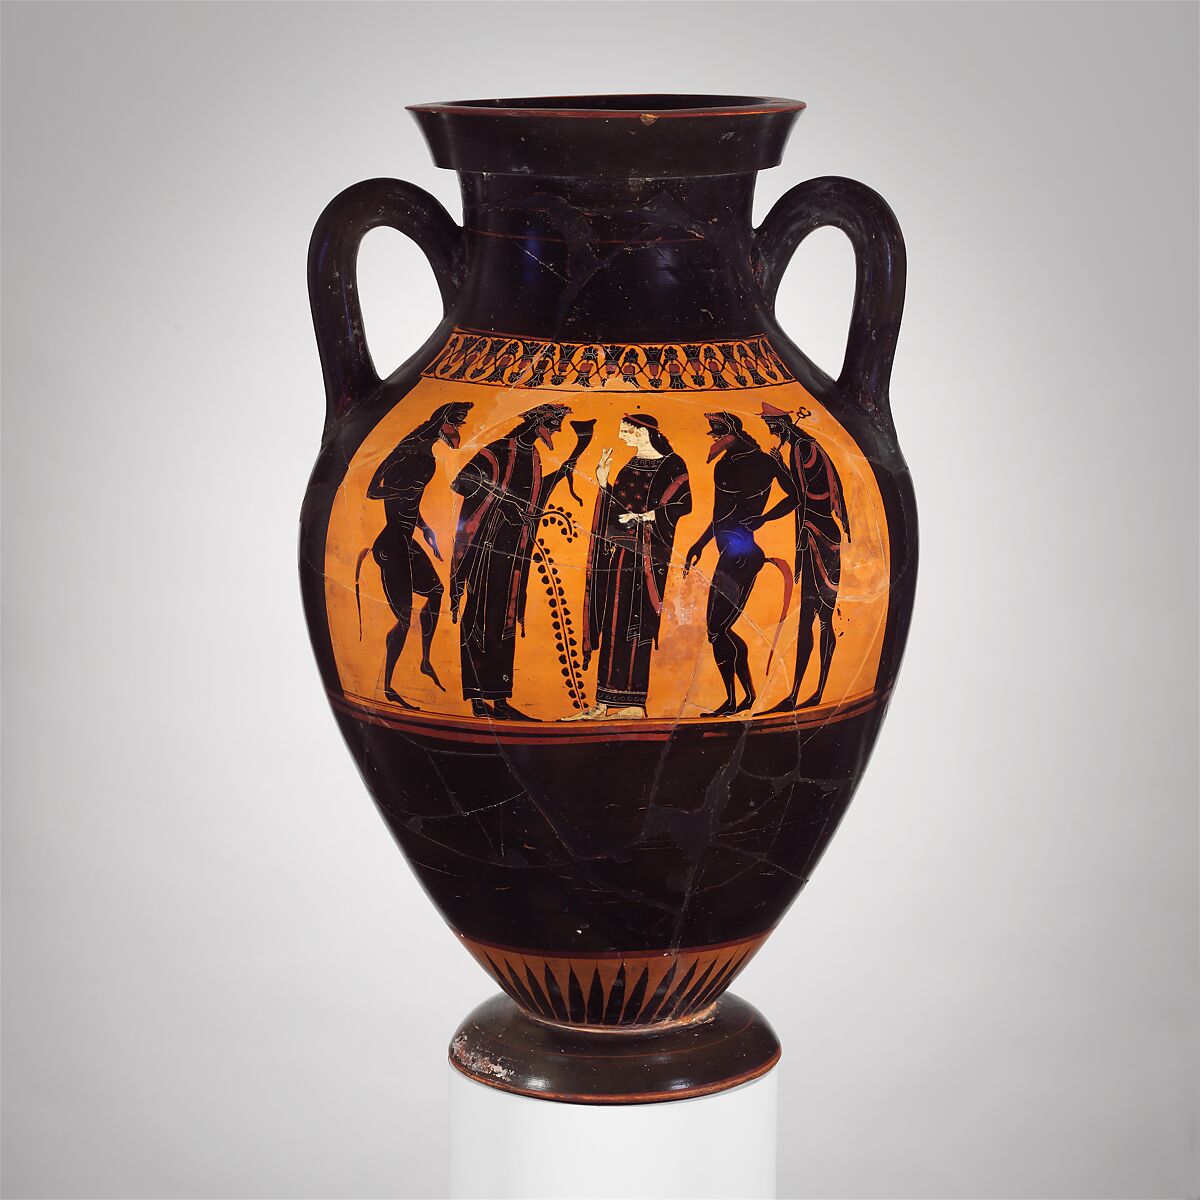 Terracotta amphora (jar), Attributed to the Bateman Group, Terracotta, Greek, Attic 